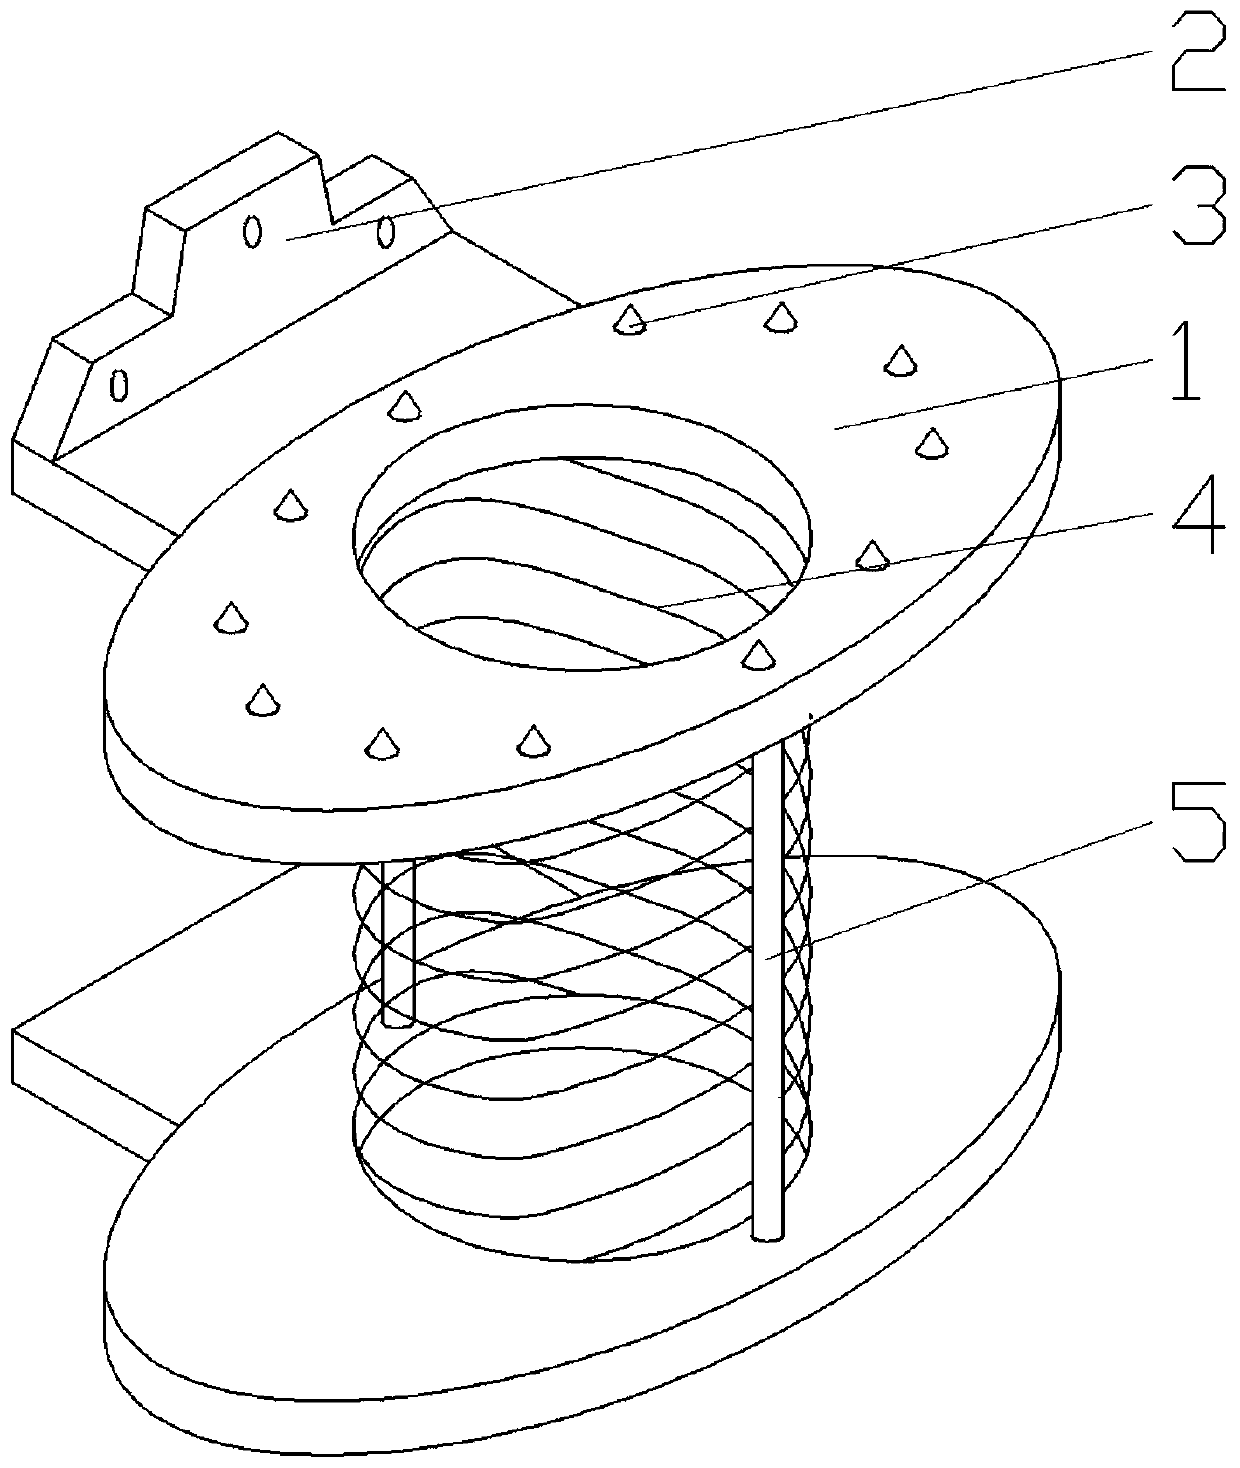 Adjustable cervical interbody fusion cage